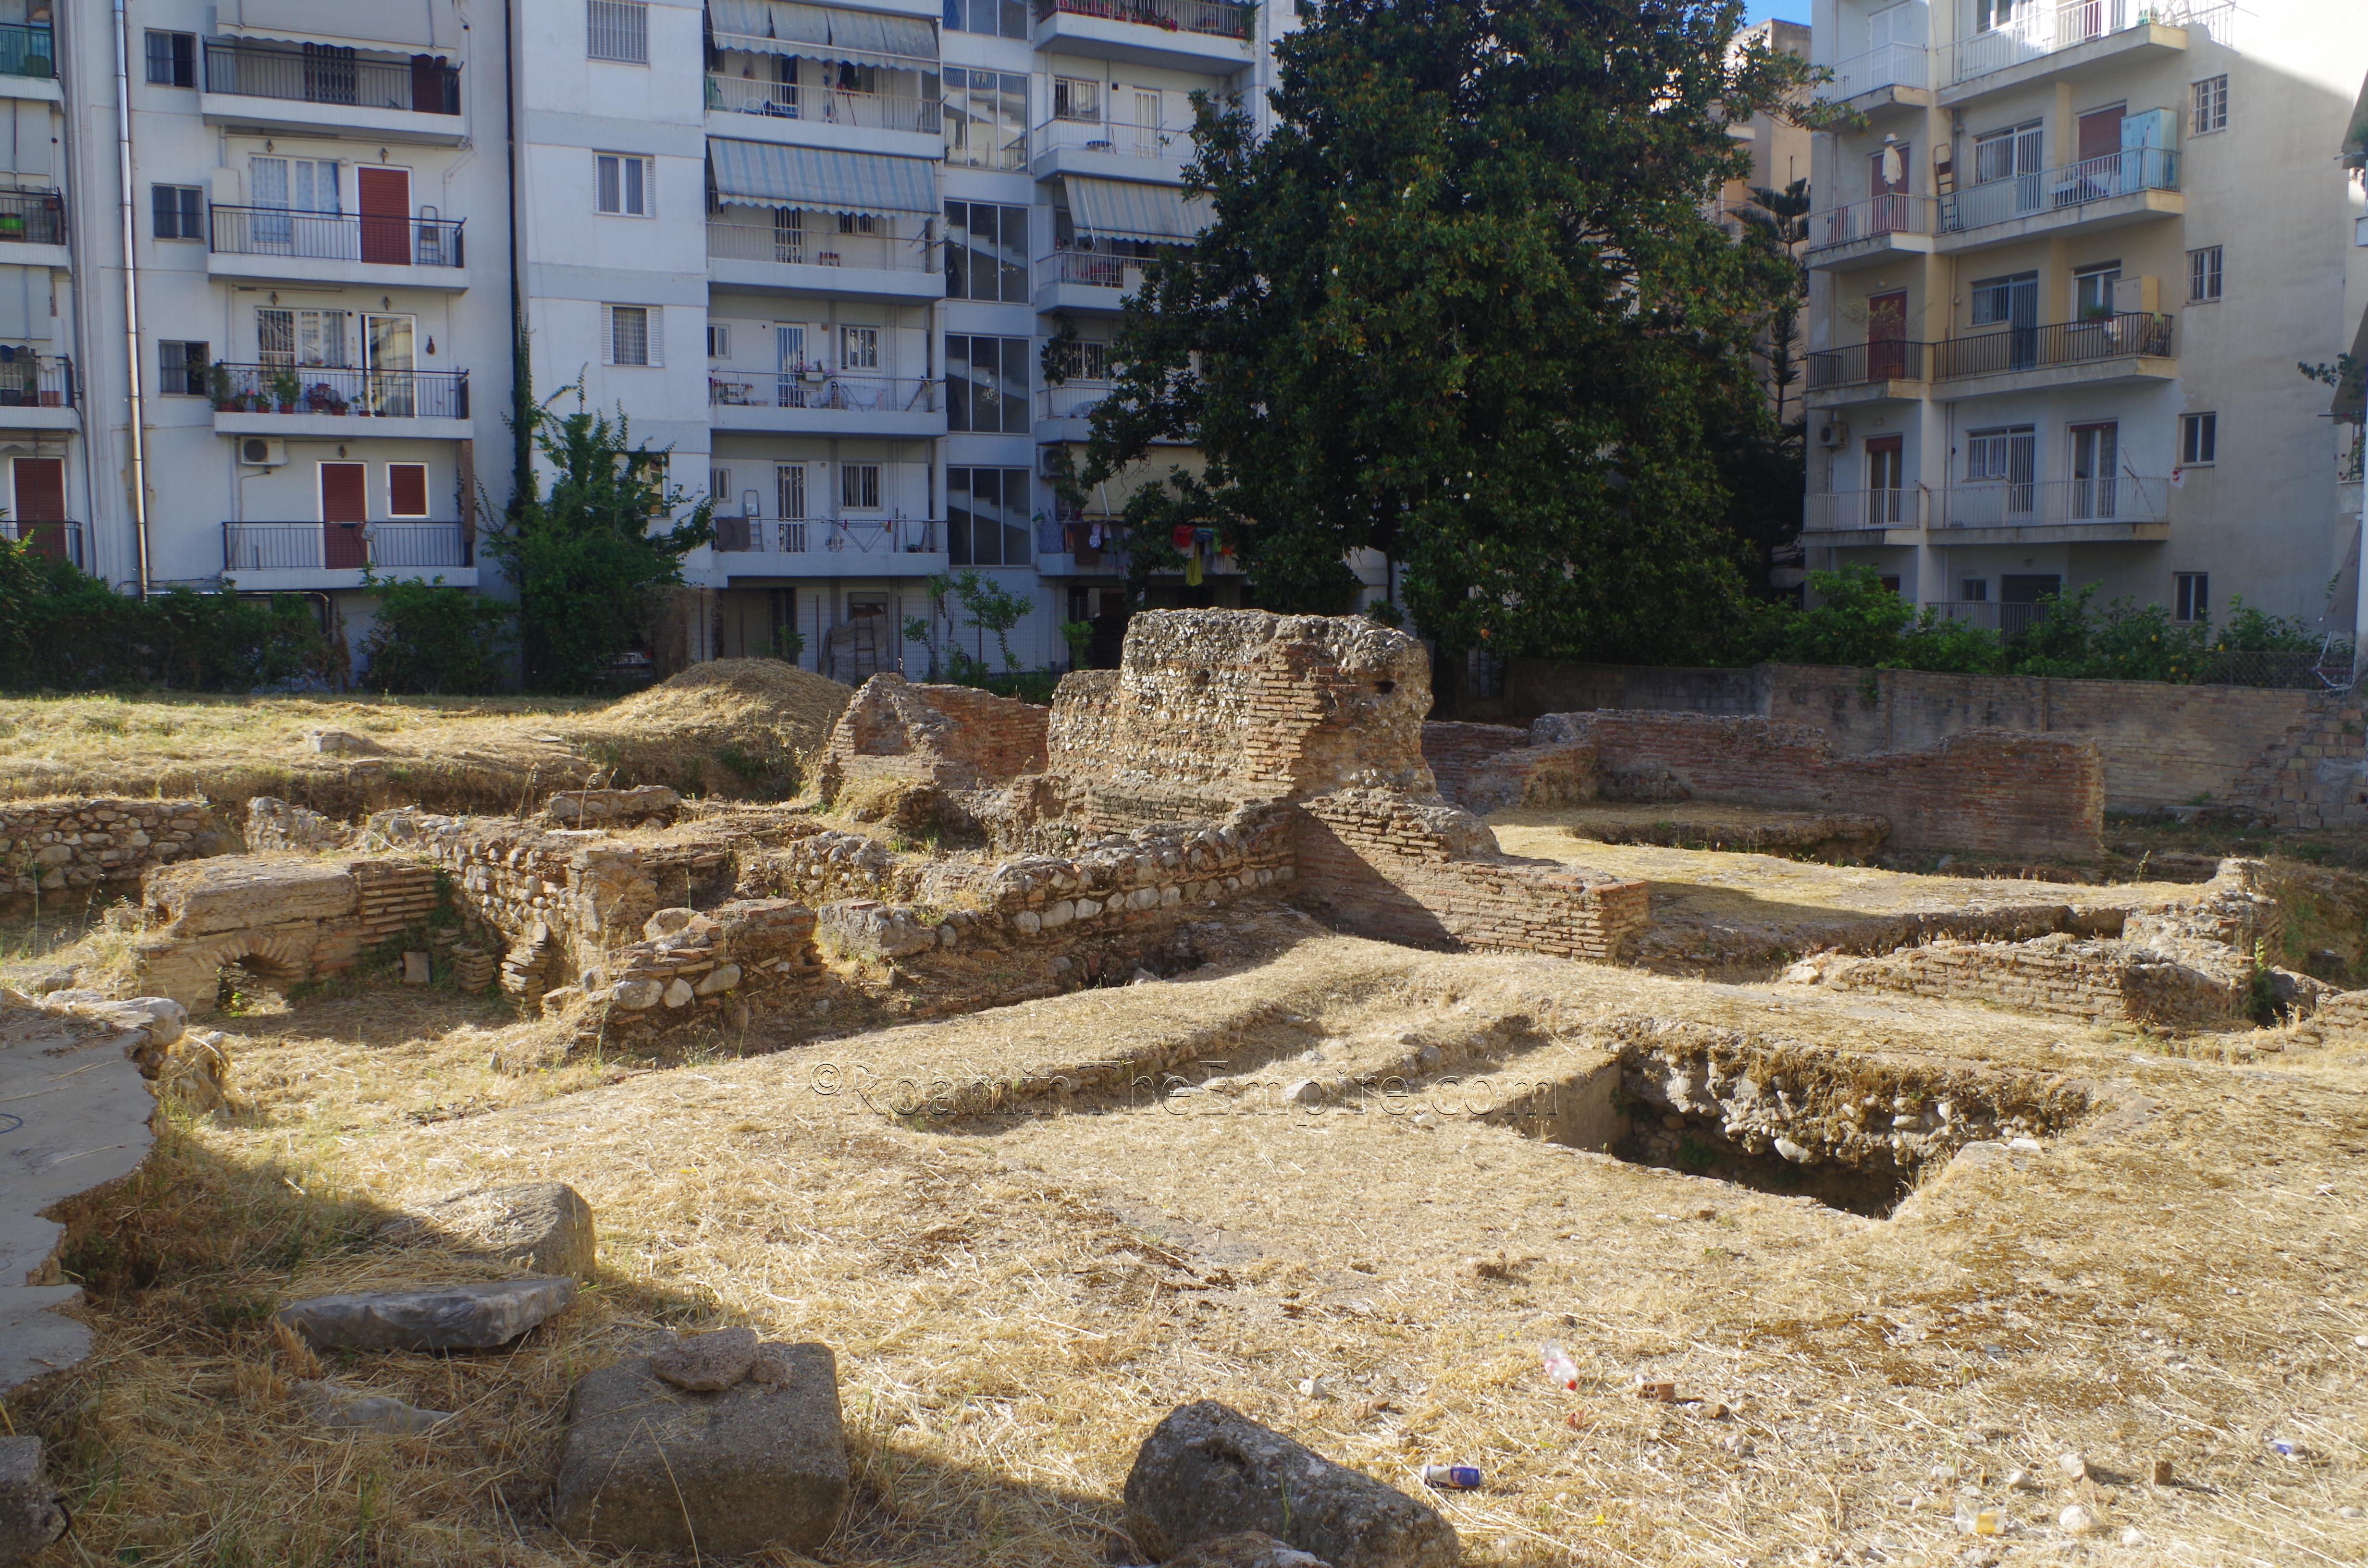 Bathing complex along Vasiliou Roufou.